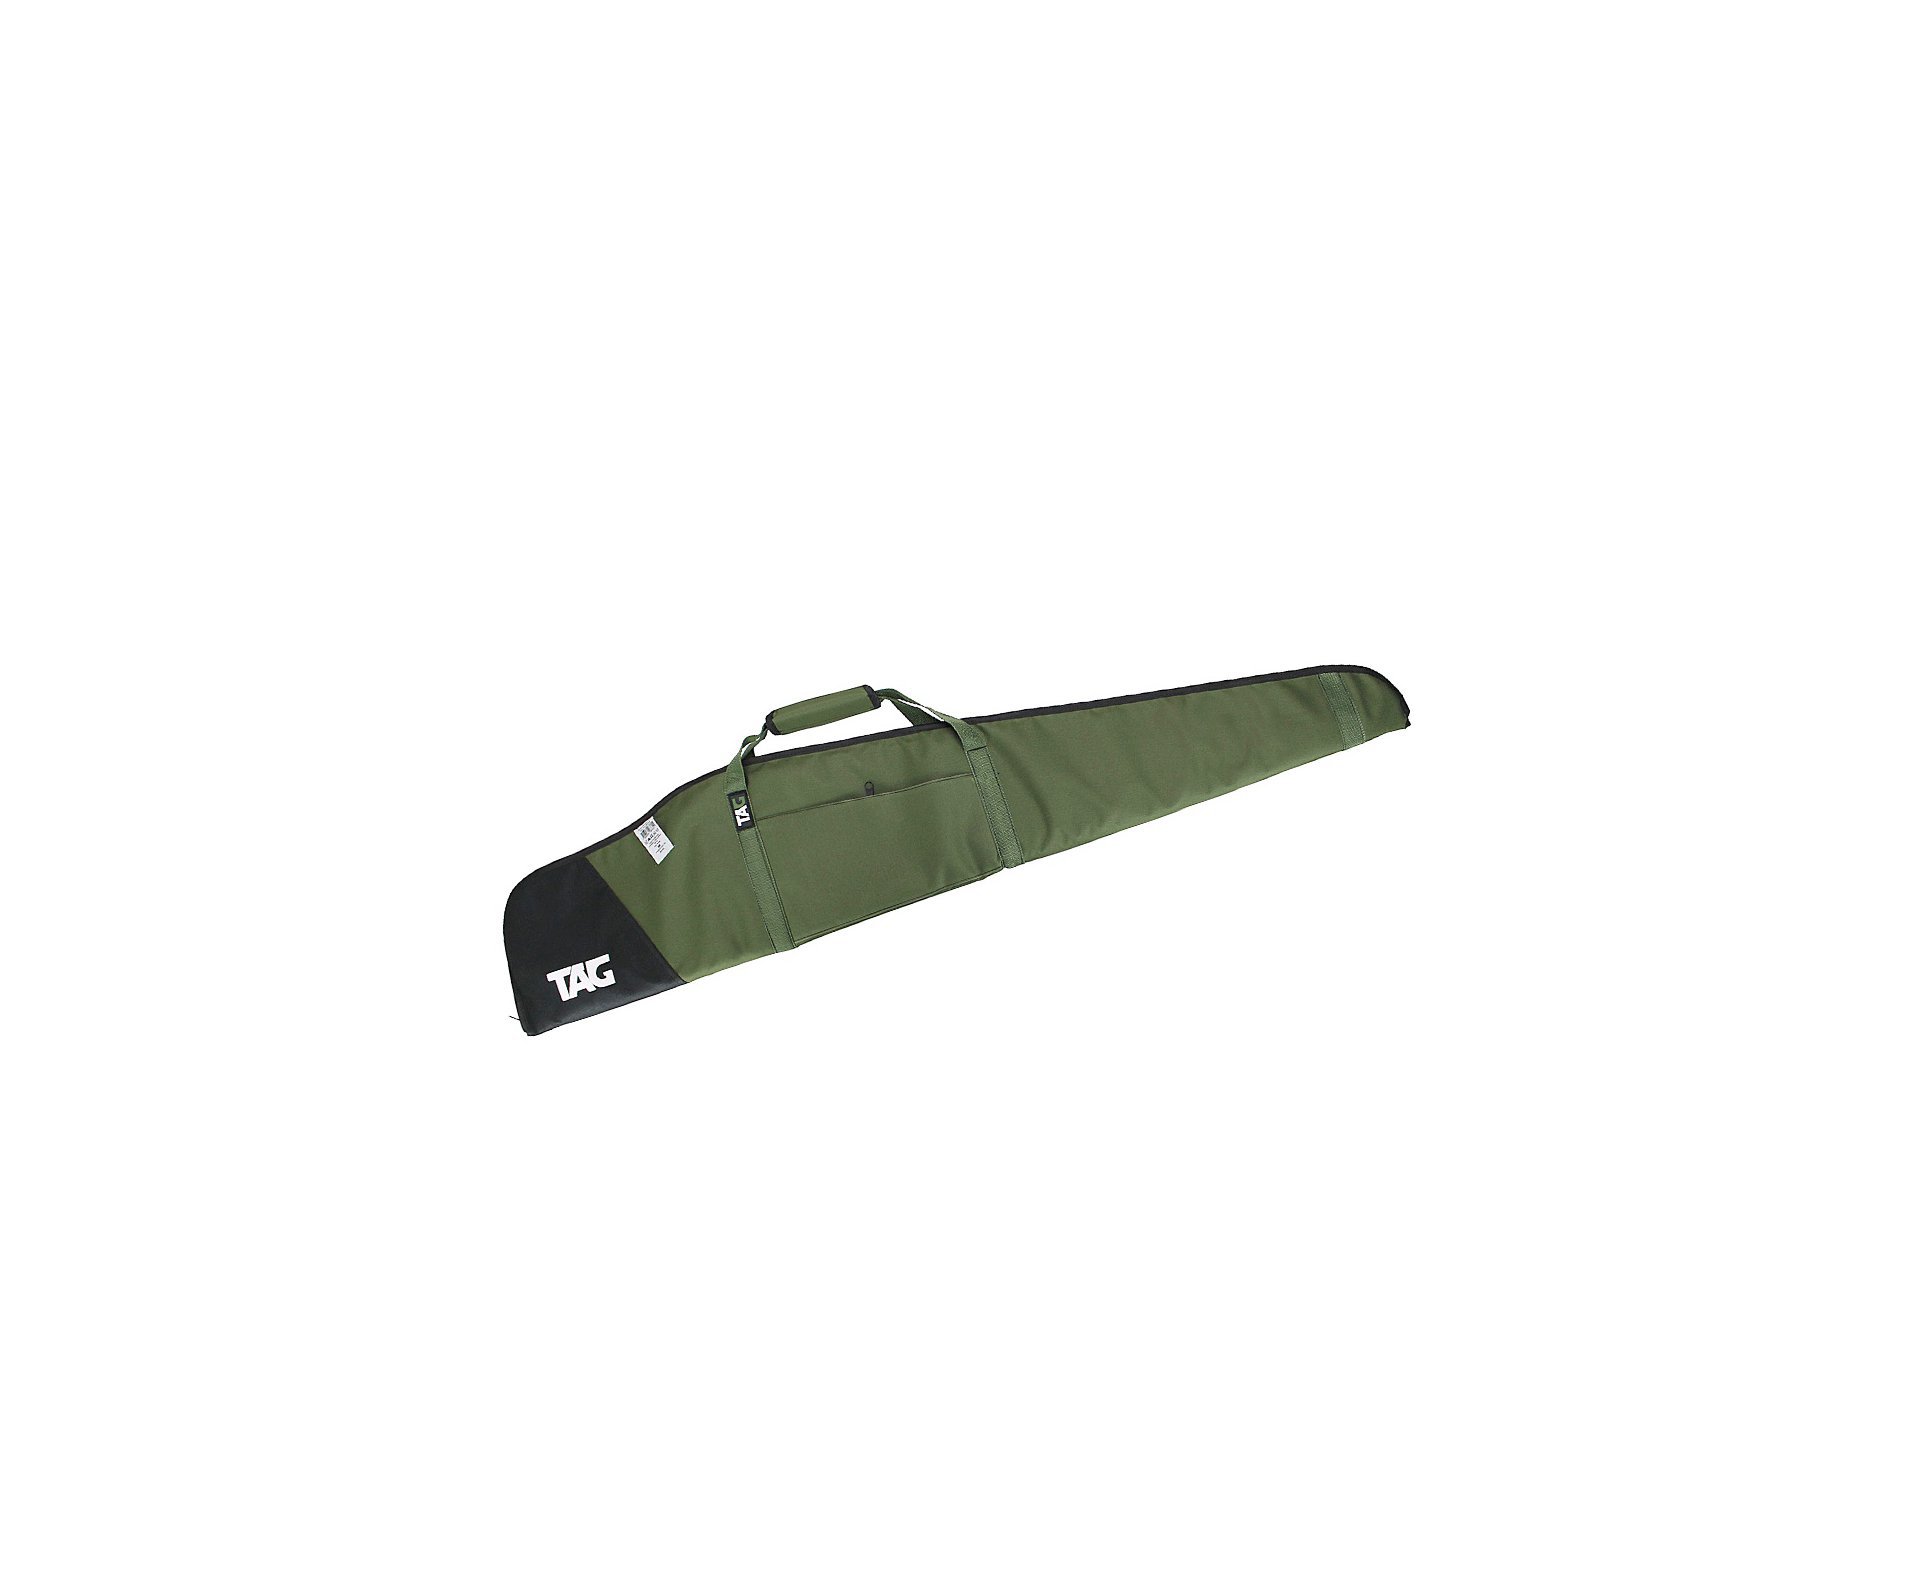 Capa Protetora para Carabina Tag Tactical Marsup 125cm Verde e Preto